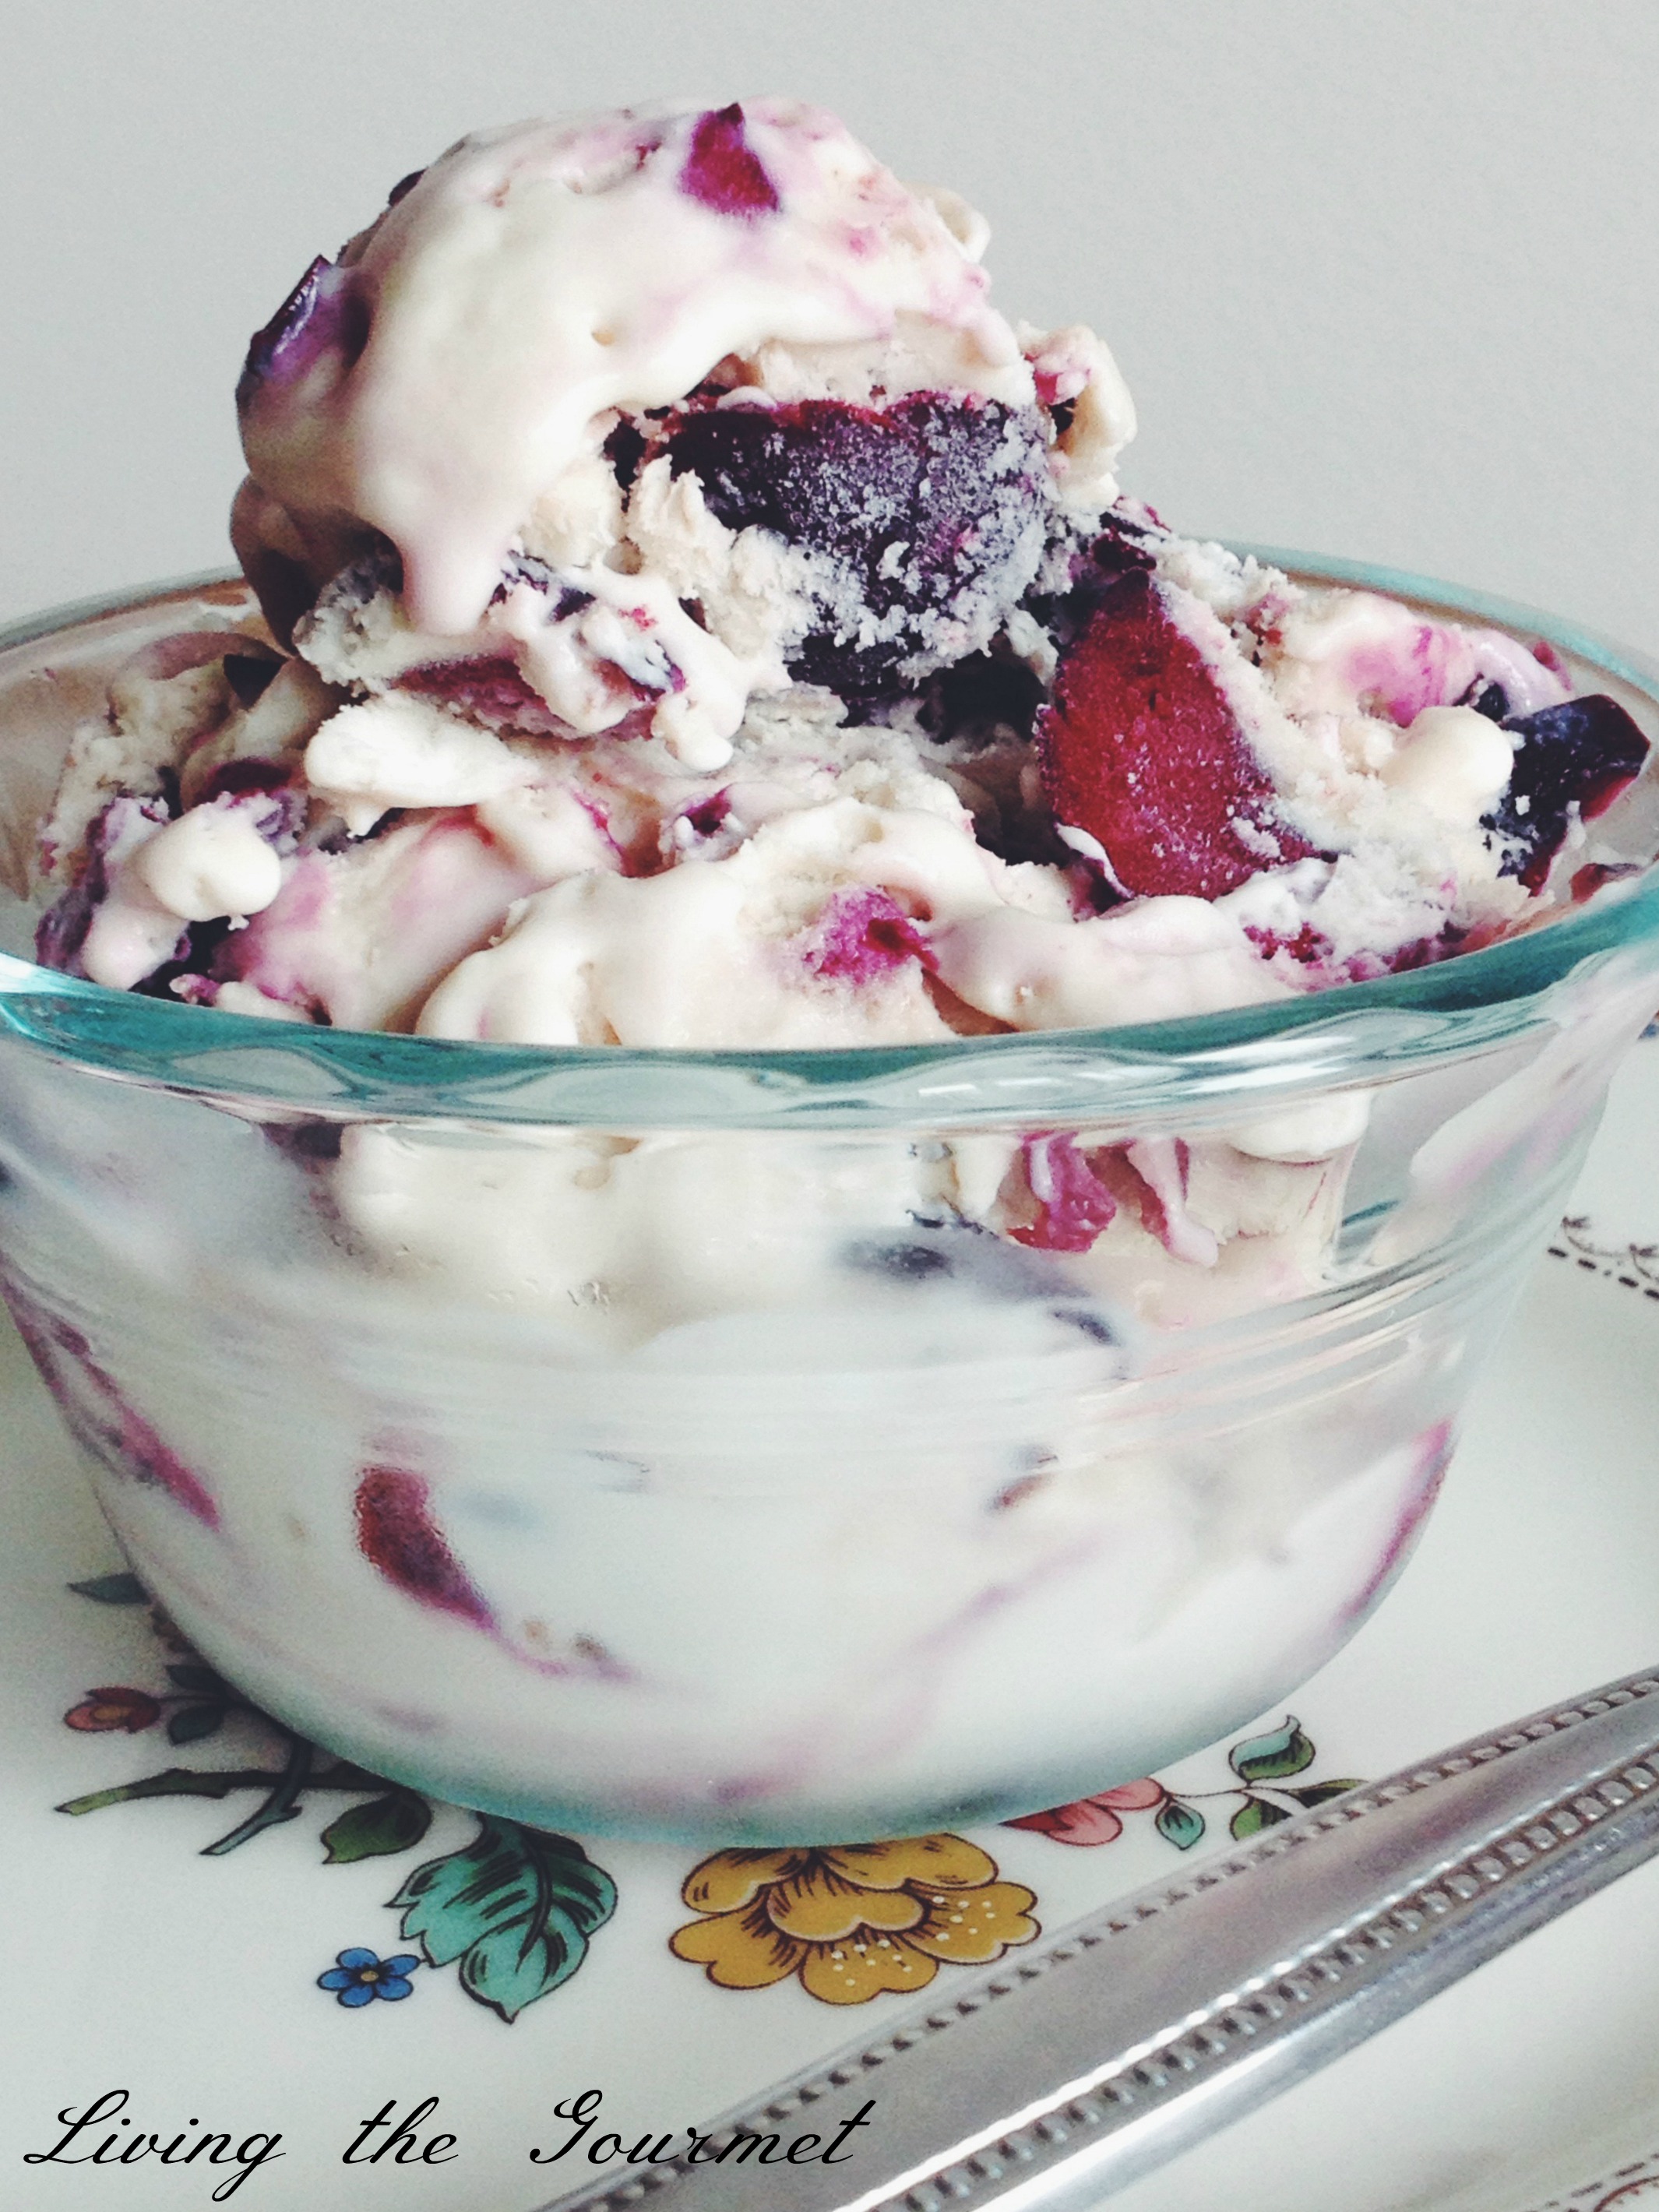 Foodista | Recipes, Cooking Tips, and Food News | Cherry Vanilla Ice Cream